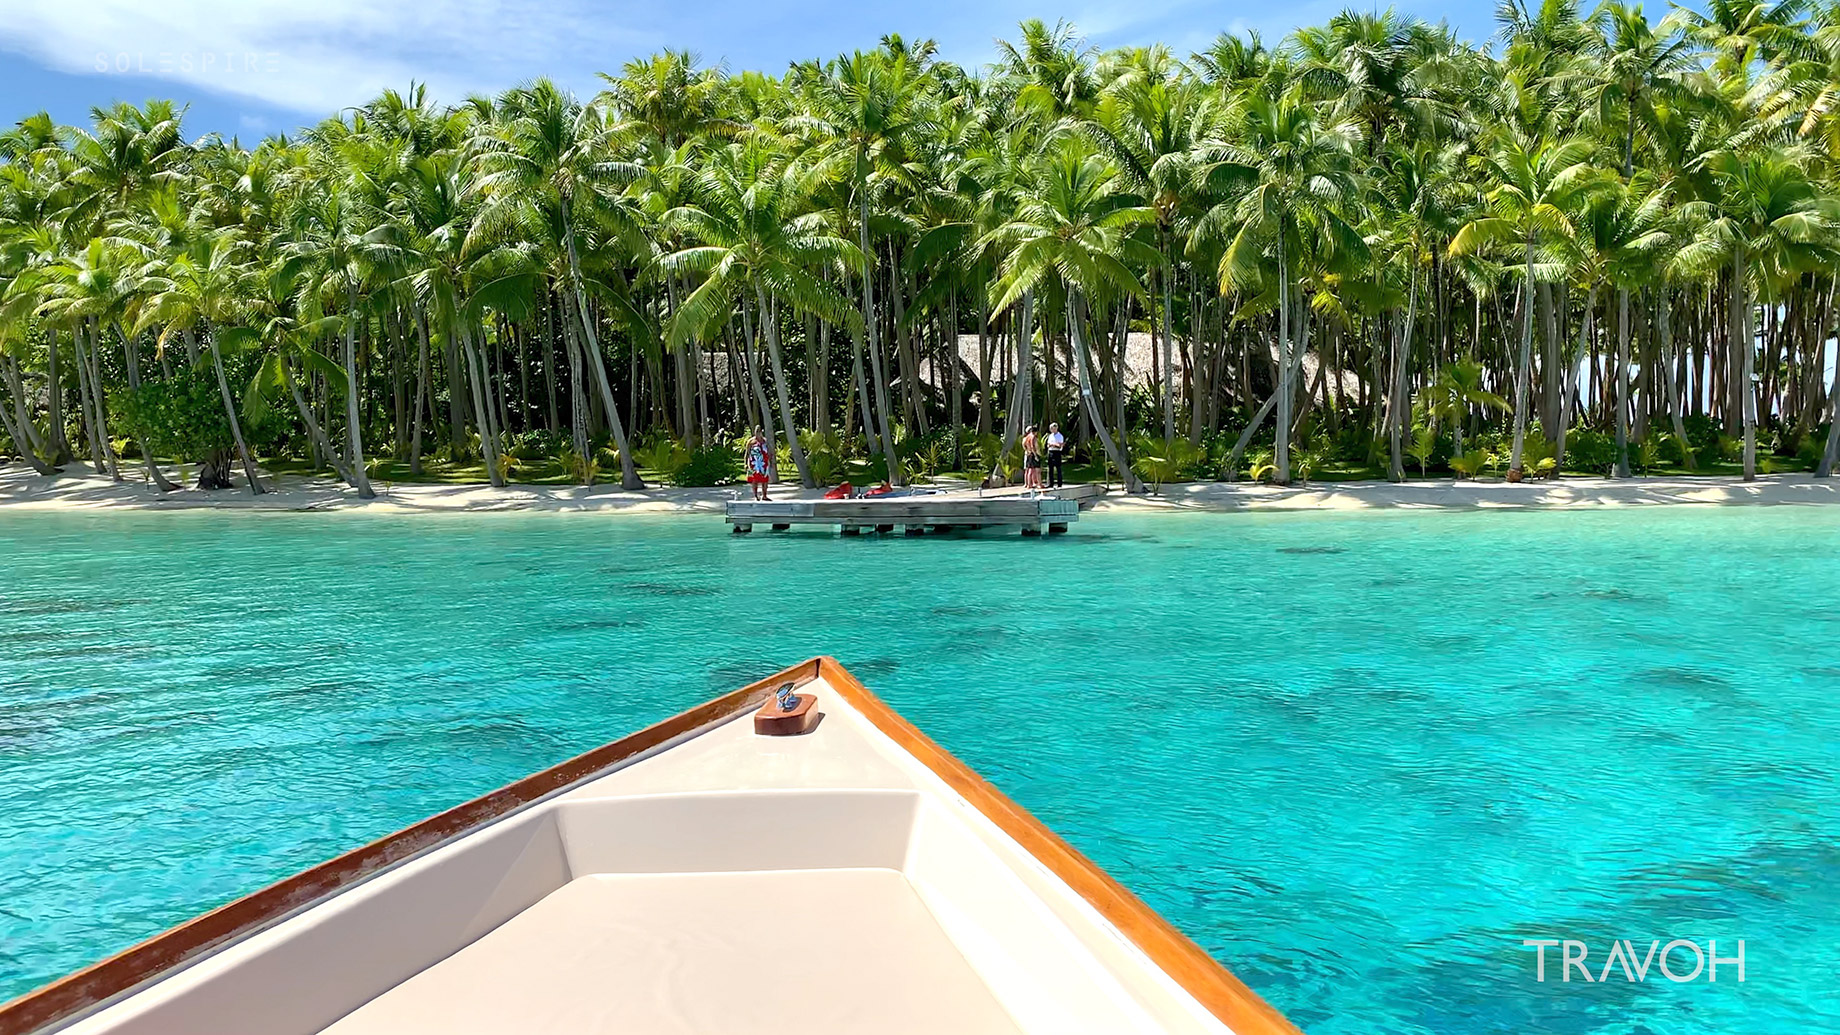 Arrival - Motu Tane Private Island Vacation - Bora Bora, French Polynesia - 4K Travel Video